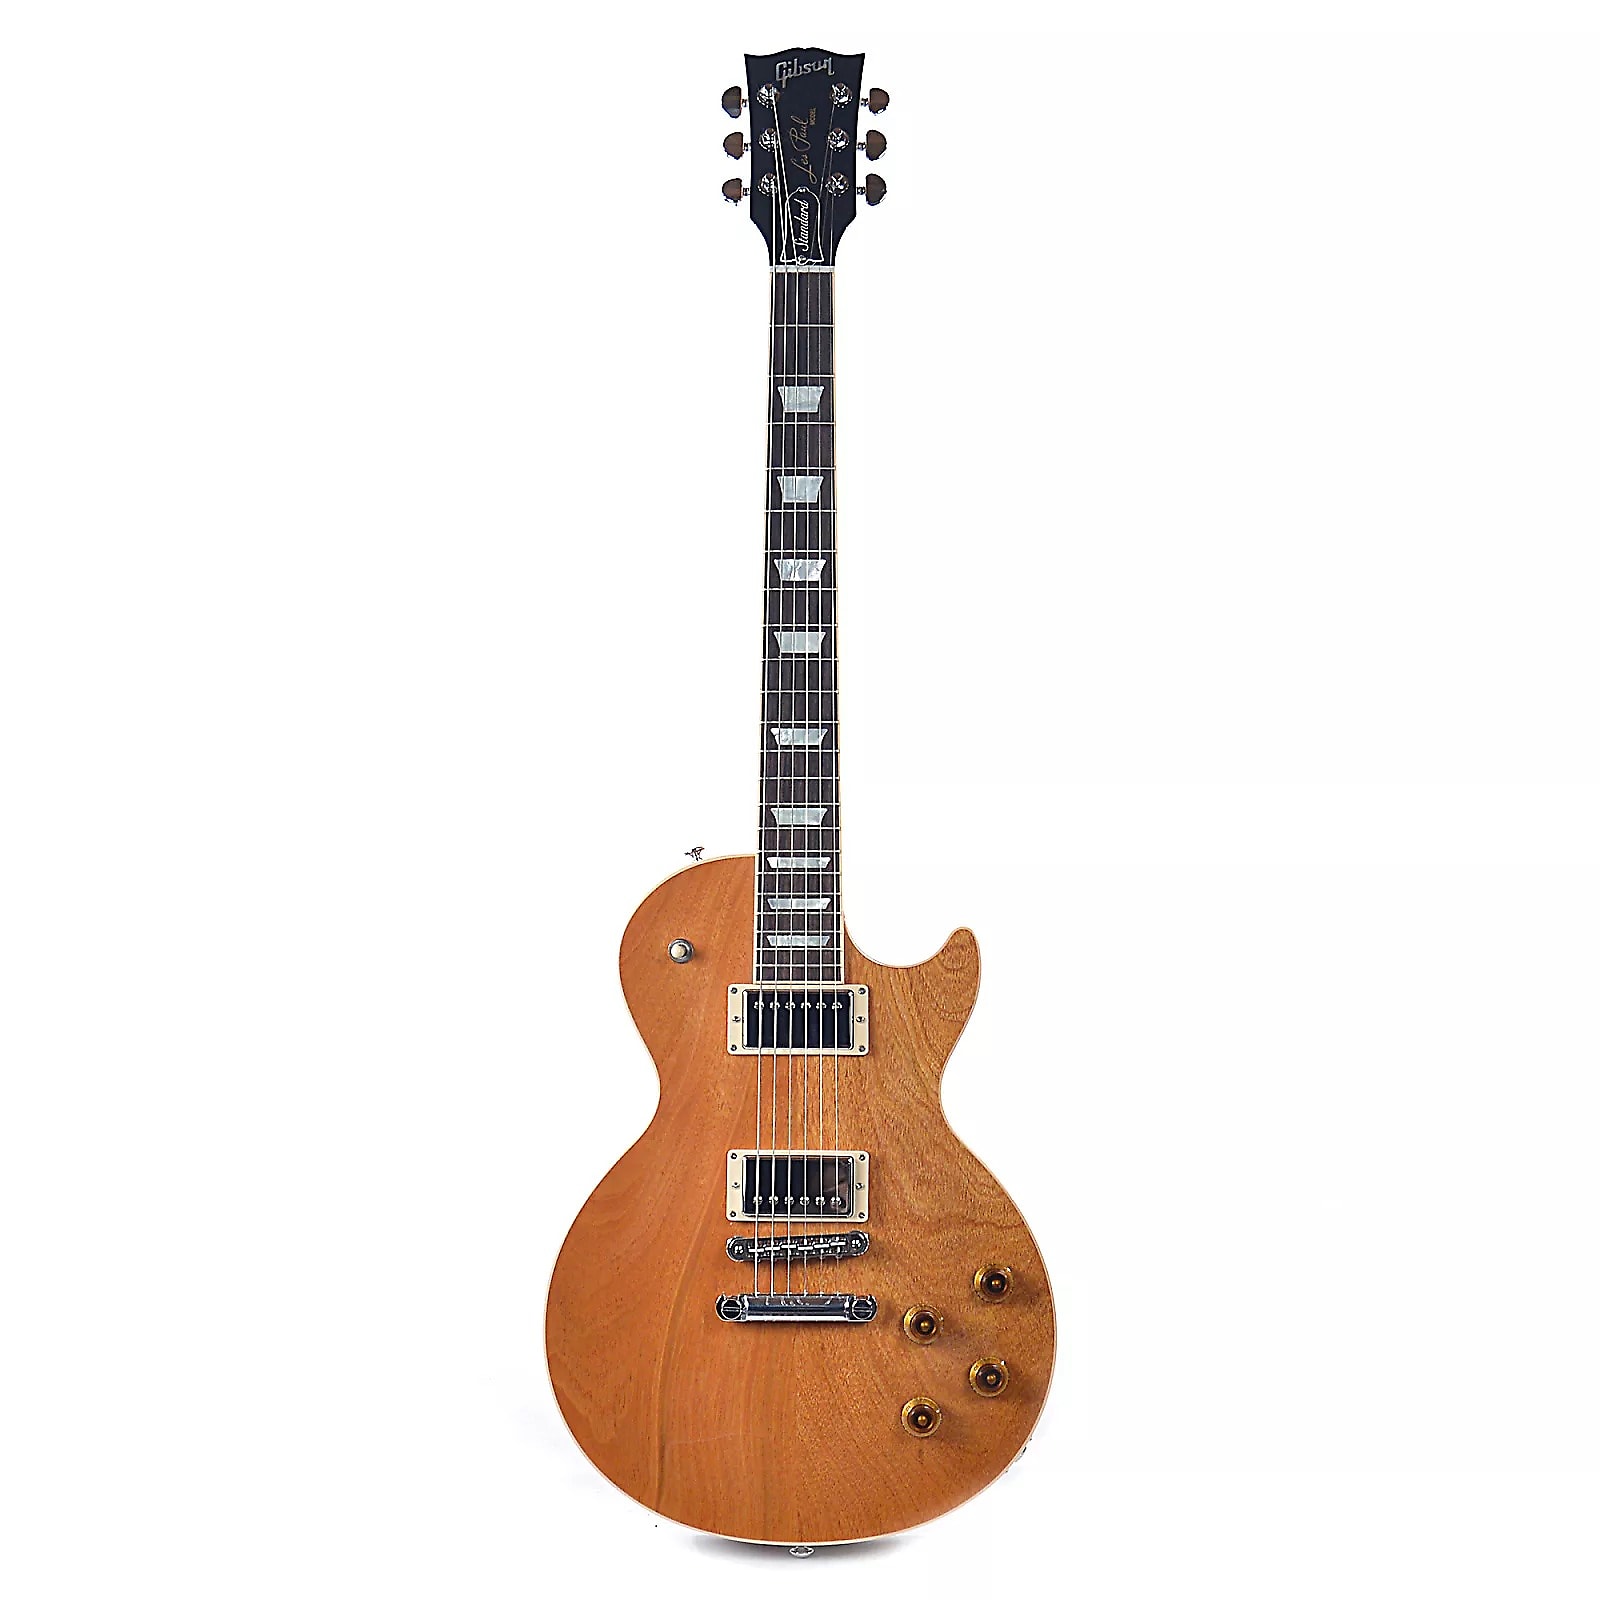 Gibson Les Paul Standard Mahogany Top Limited Run 2016 | Reverb